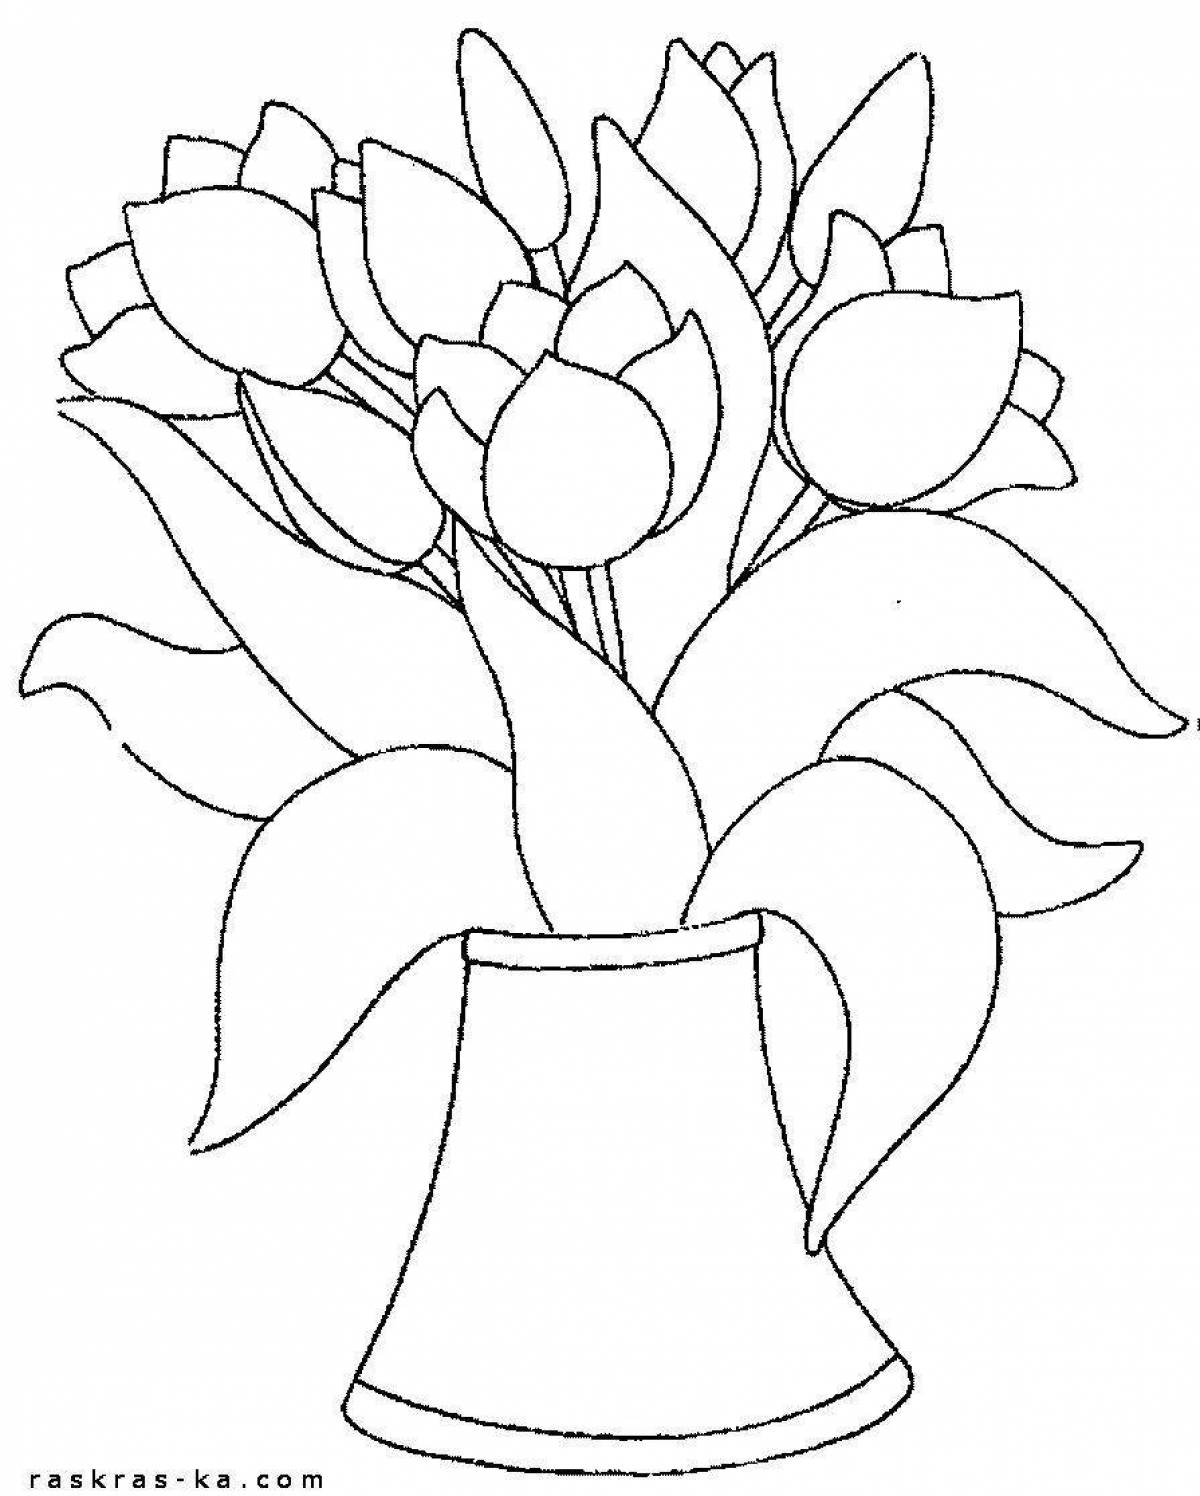 Joyful vase of flowers coloring book for children